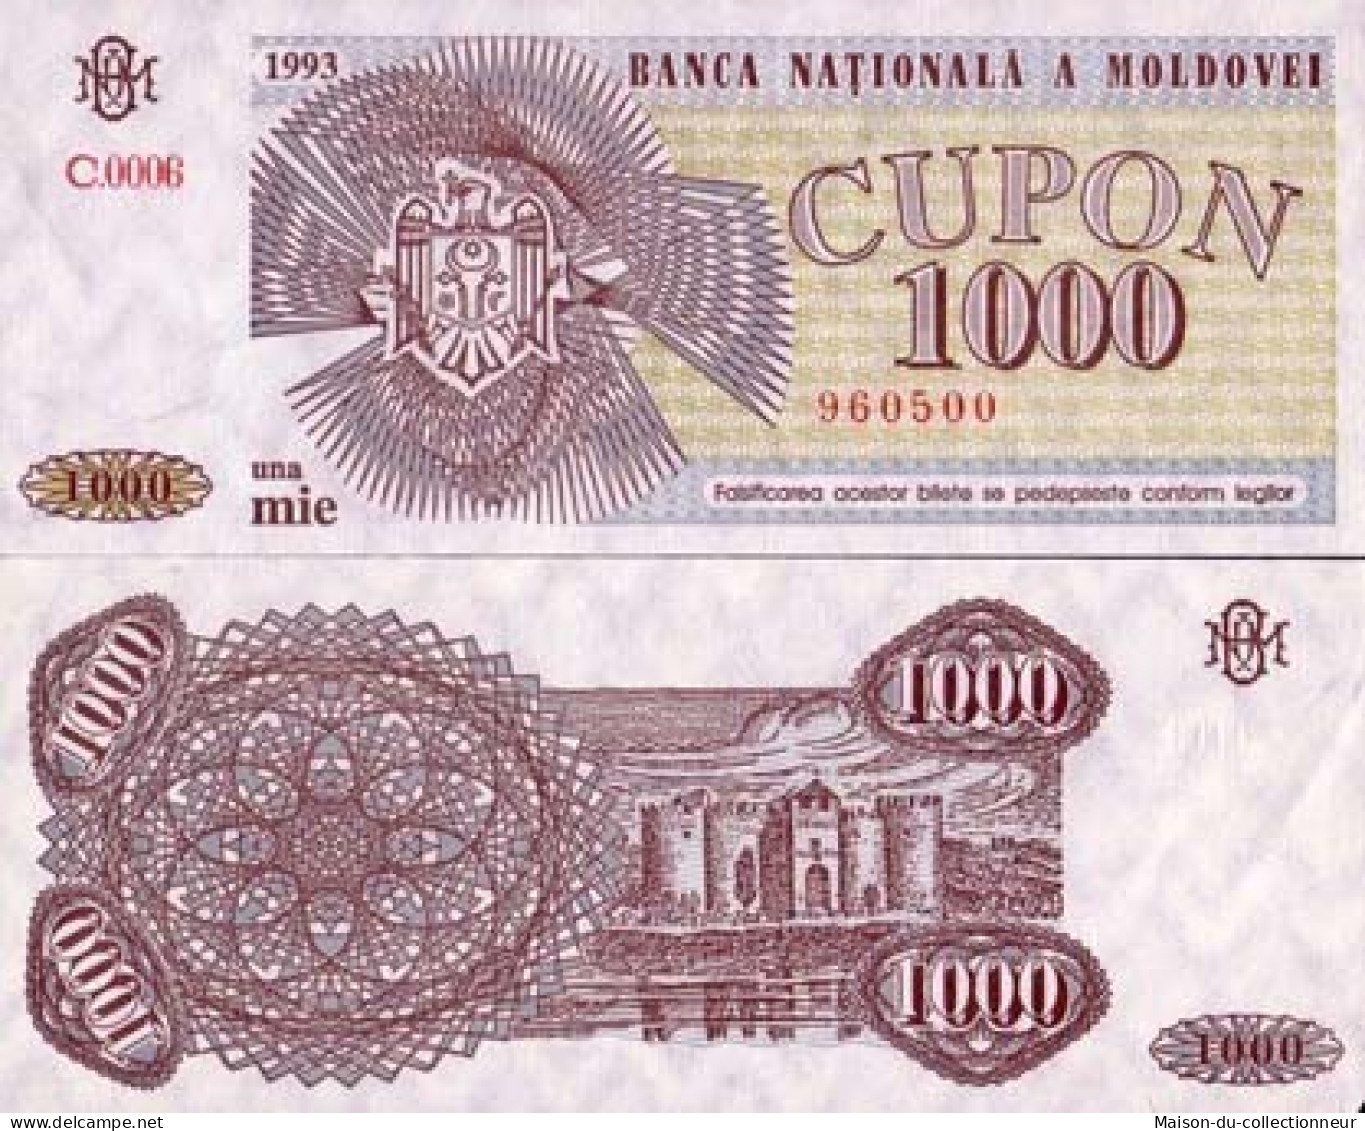 Billets Banque Moldavie Pk N°  3 - 1000 Cupon - Moldawien (Moldau)